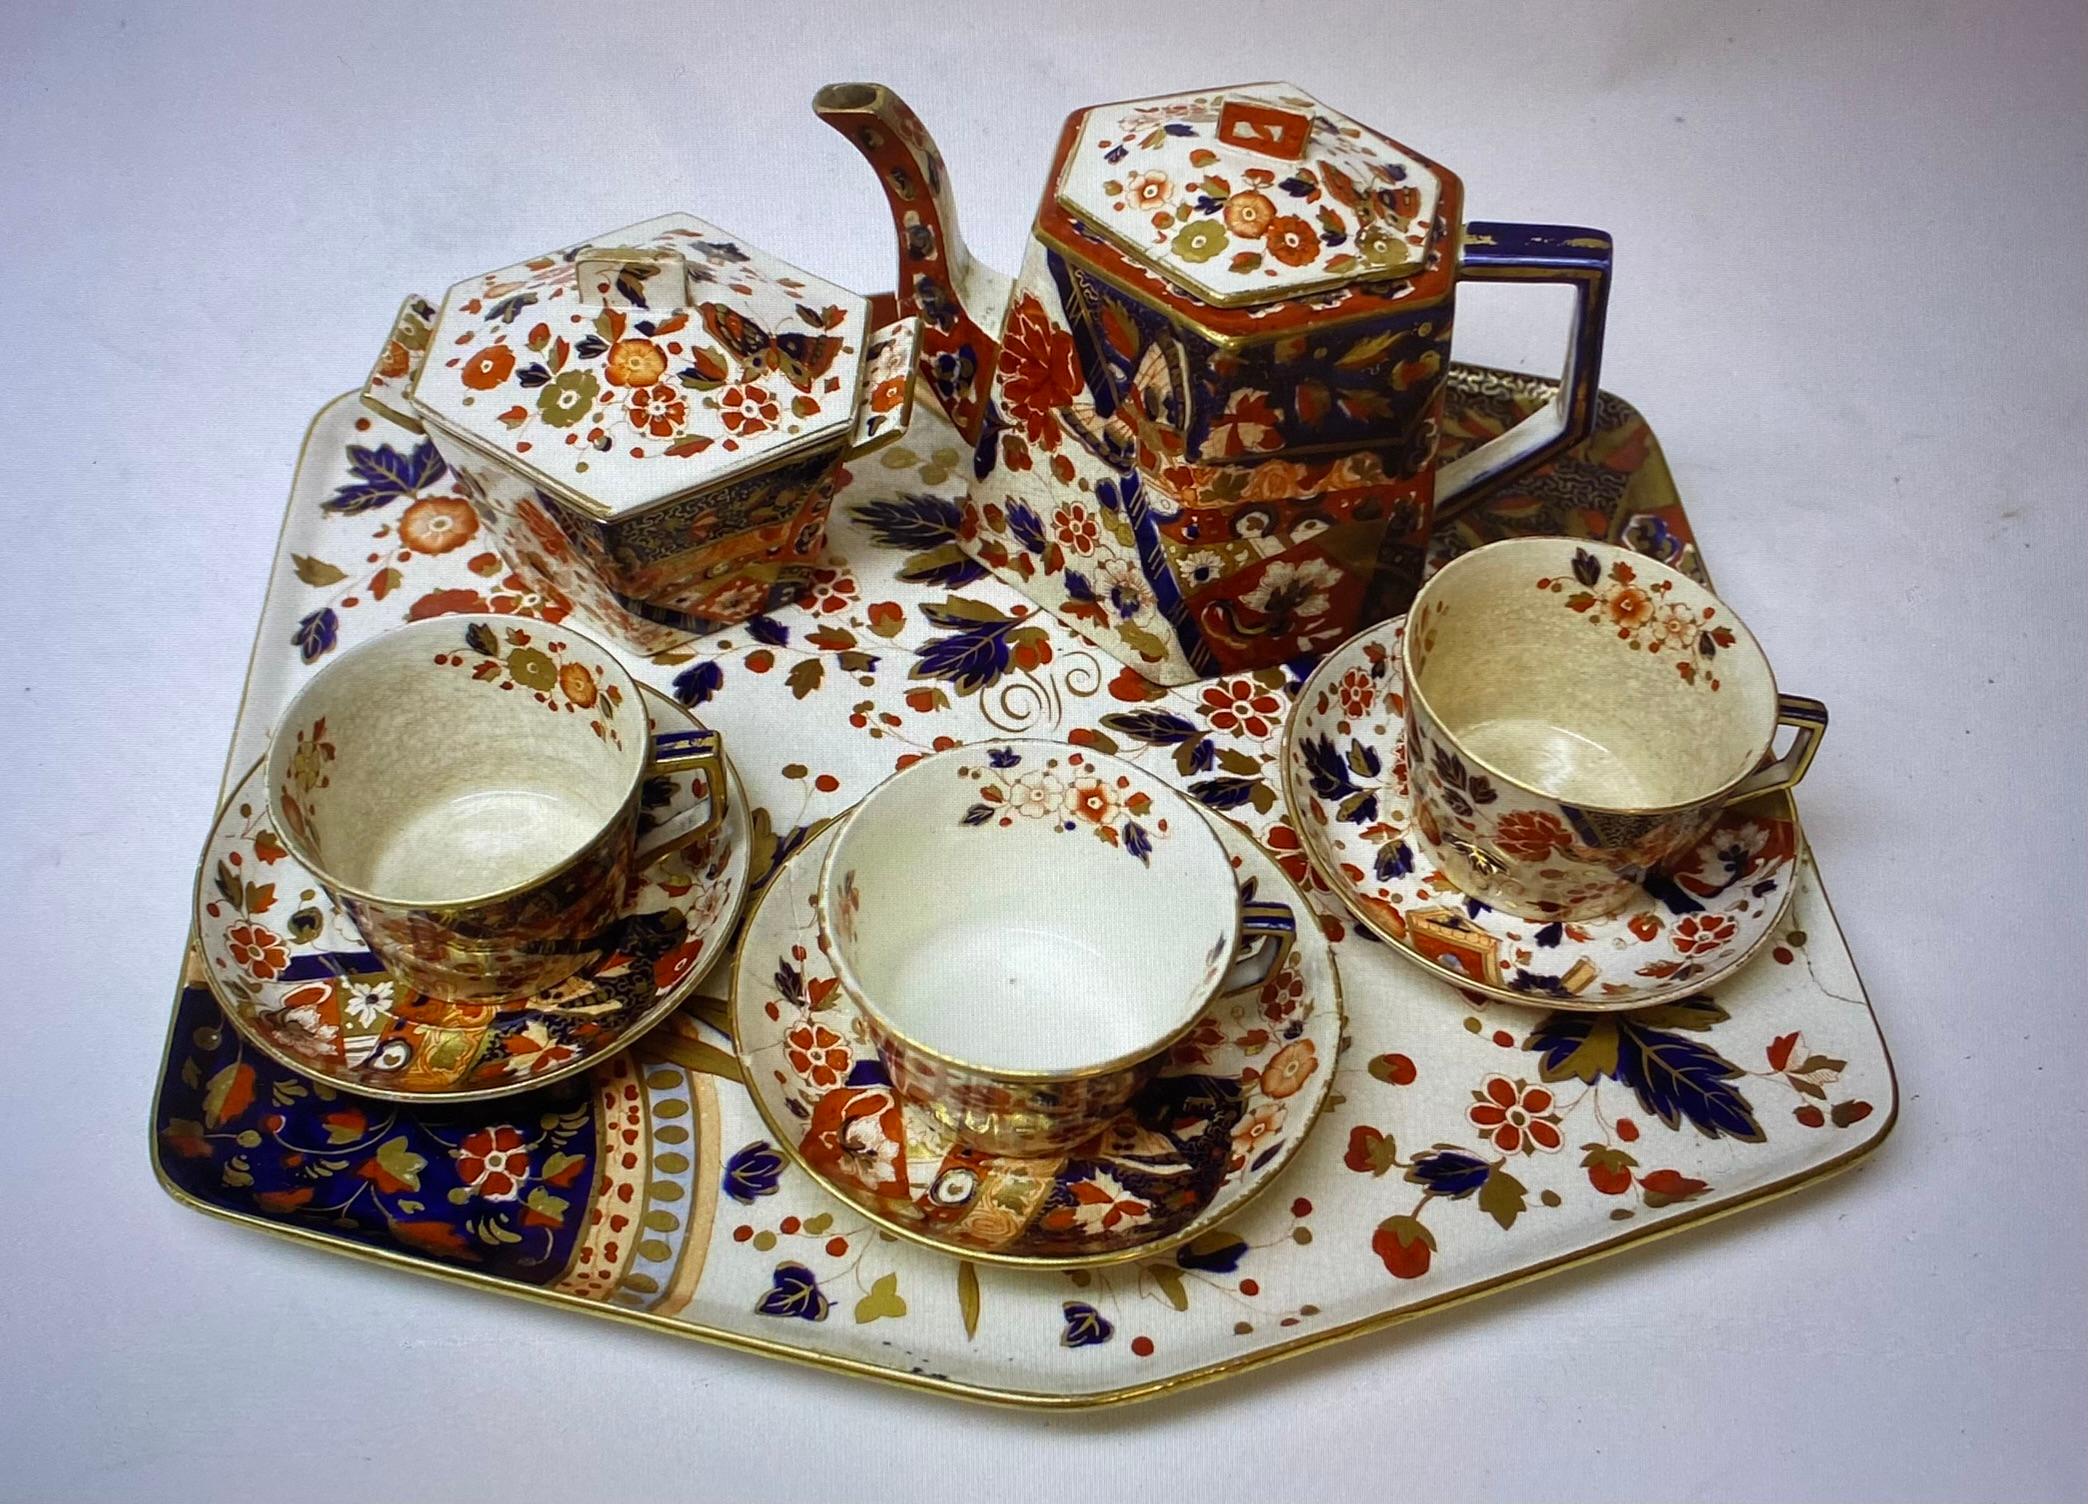 Old Derby Imari tea set including:
Measure: Tray 15